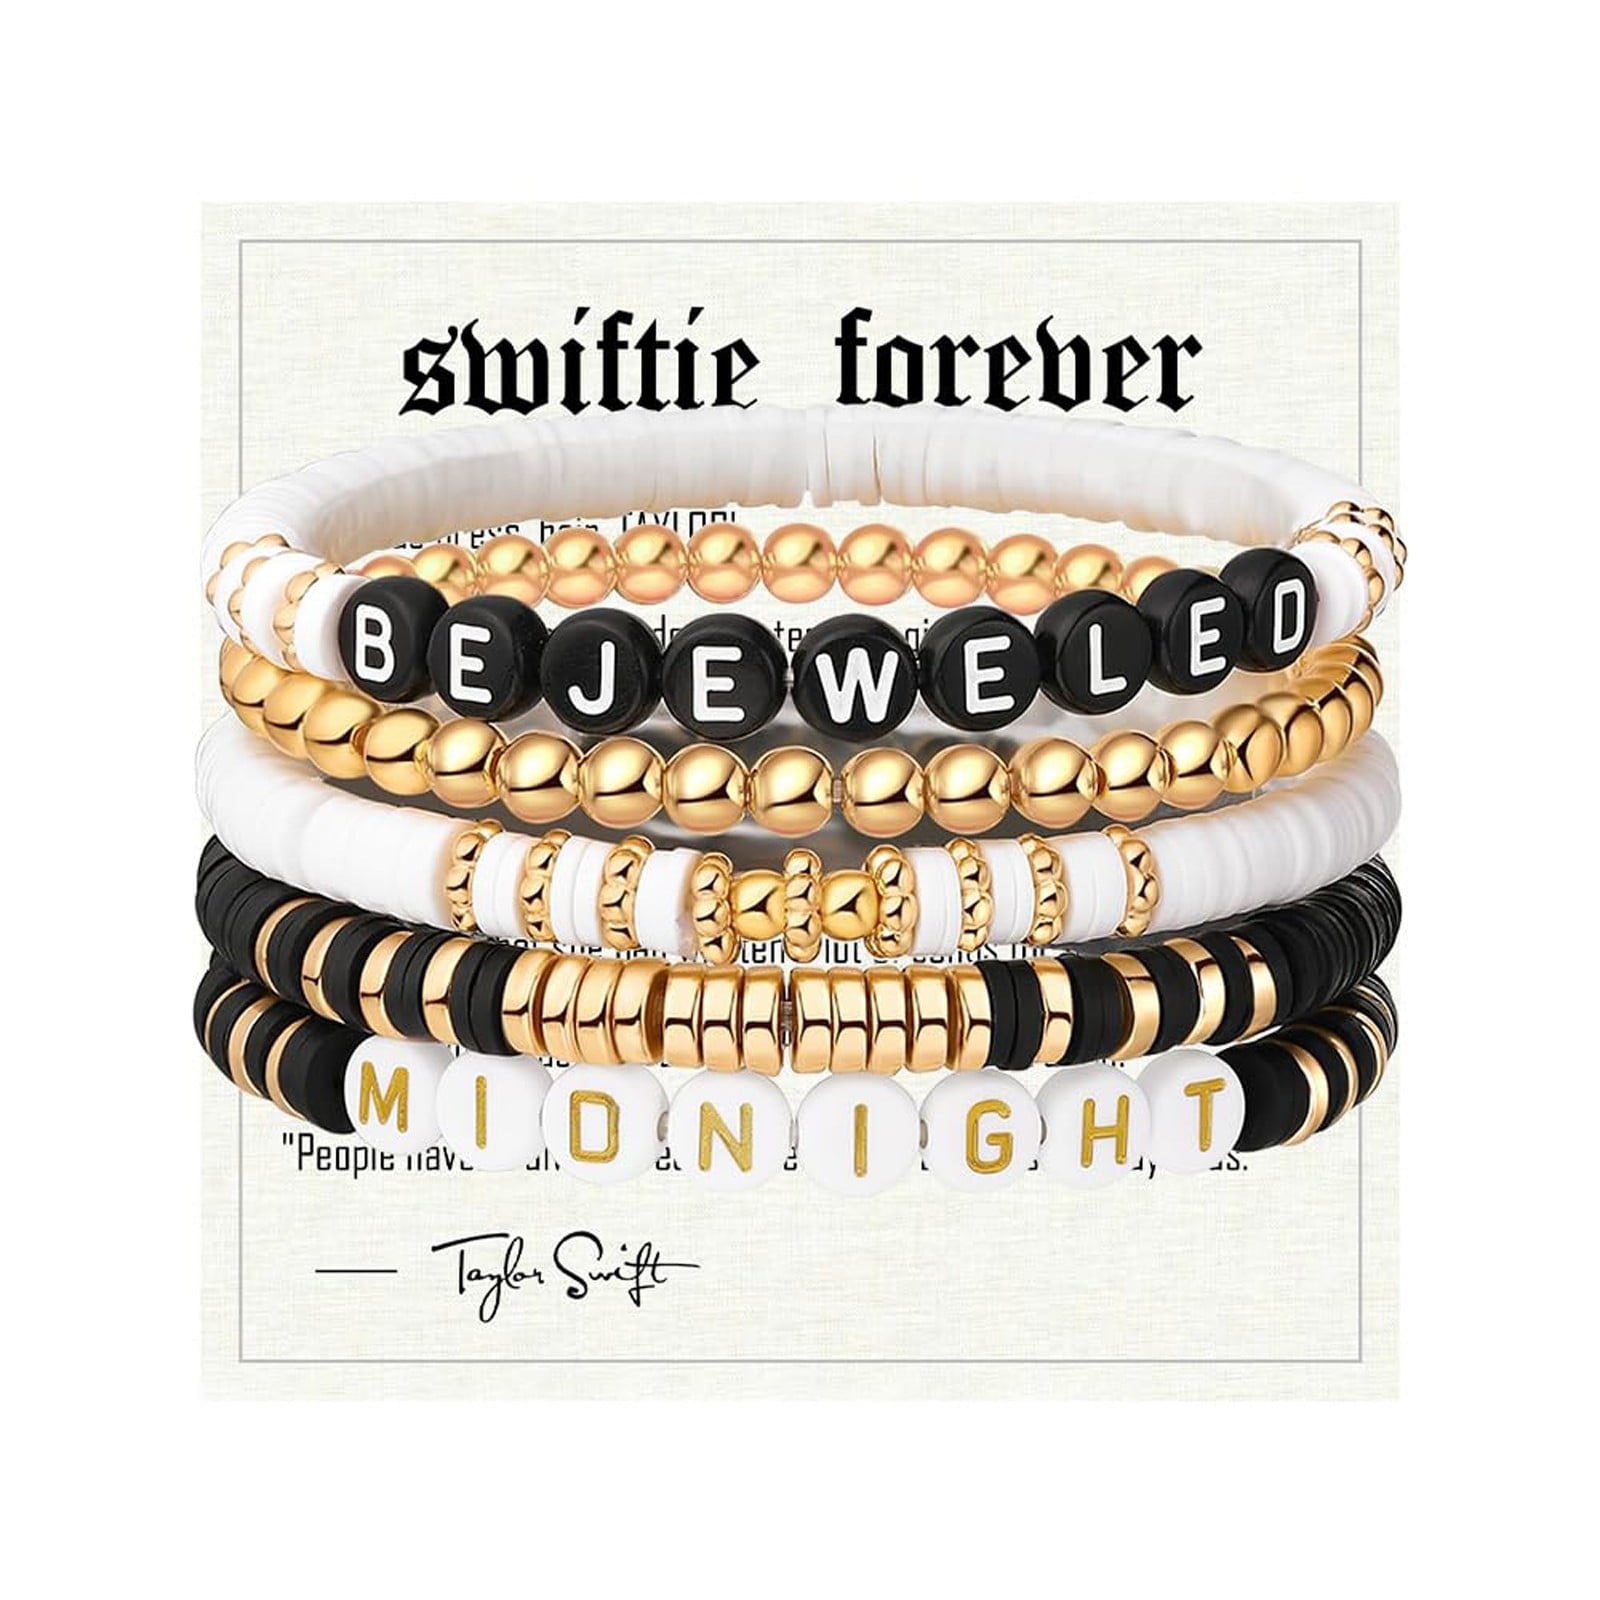 Swiftie Eras Tour Friendship Bracelet Class - Craft & Connect with Taylor  Swift's Music